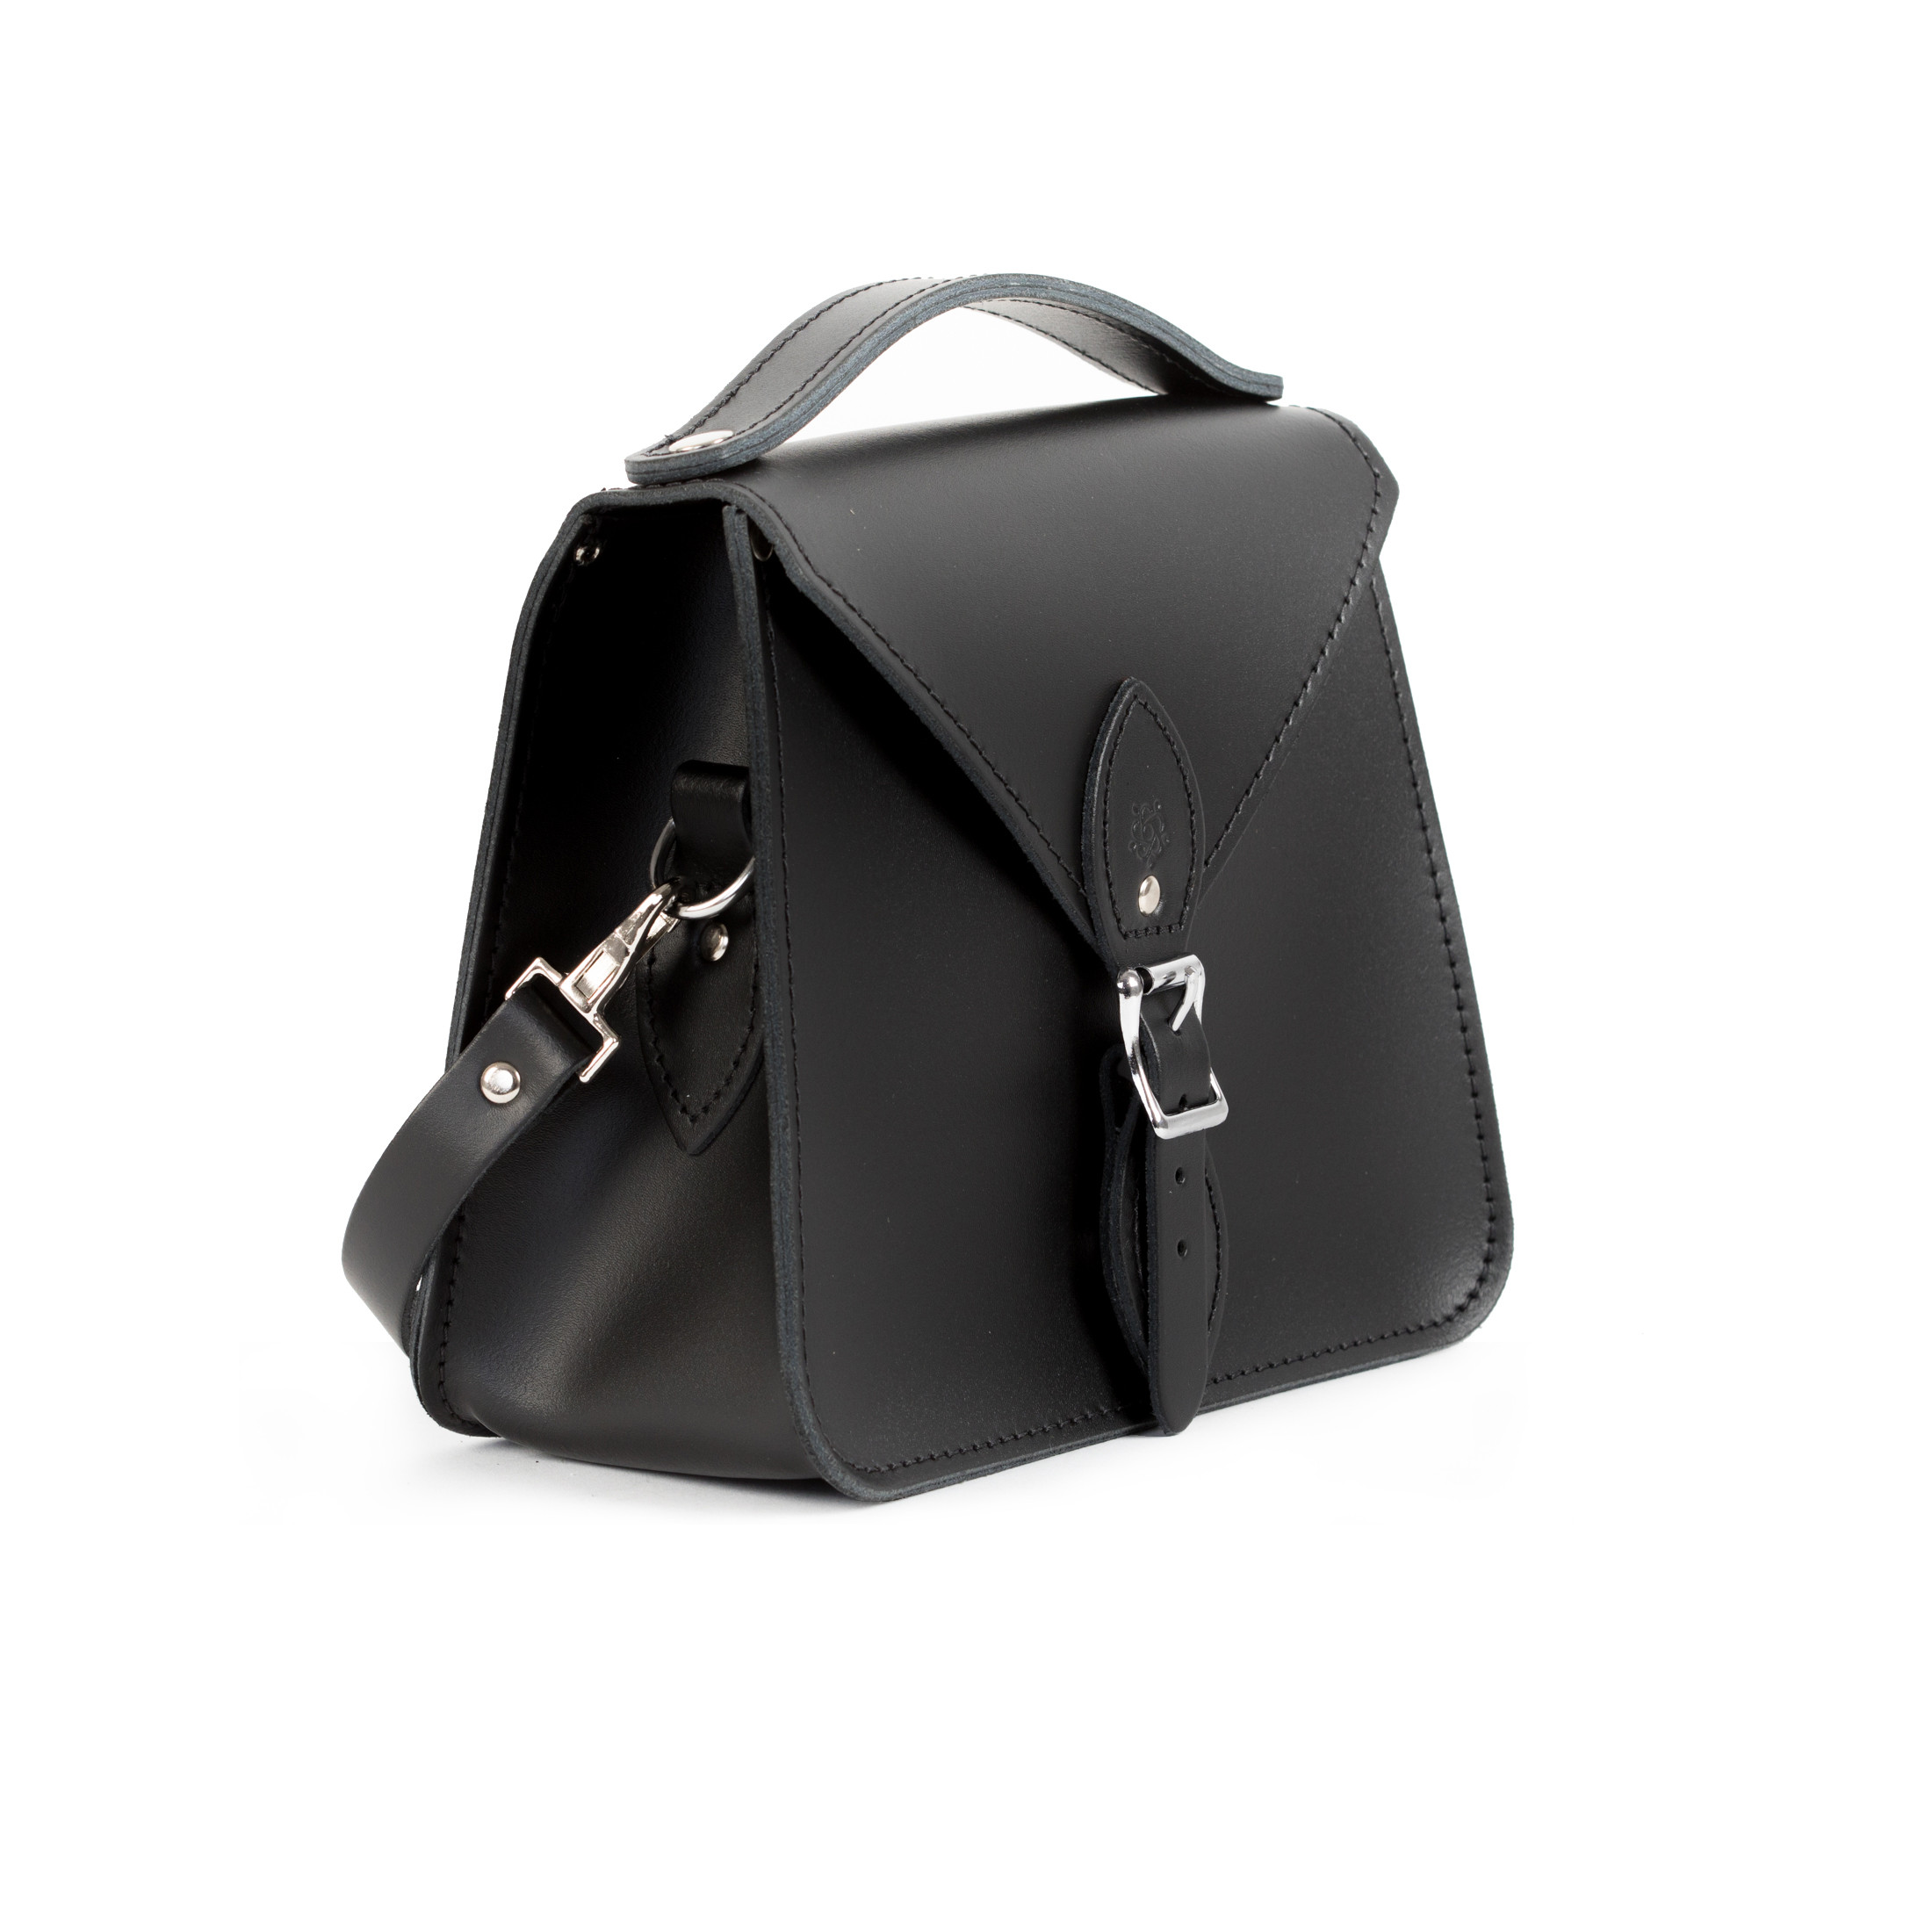 Esme Premium Leather Crossbody Bag in Matte Black